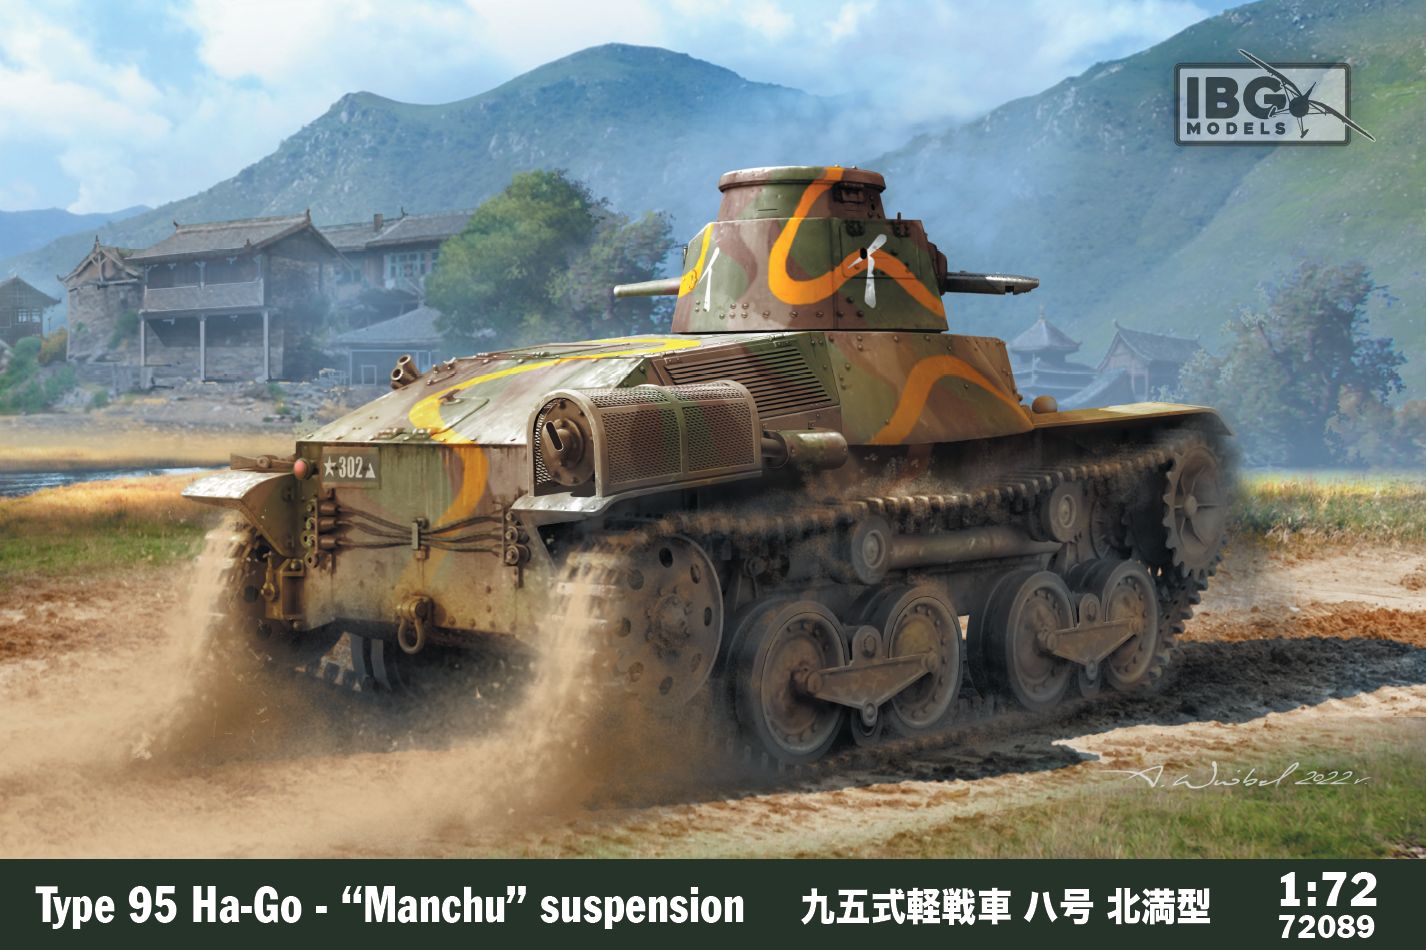 Type 95 Ha-Go "Manchu"